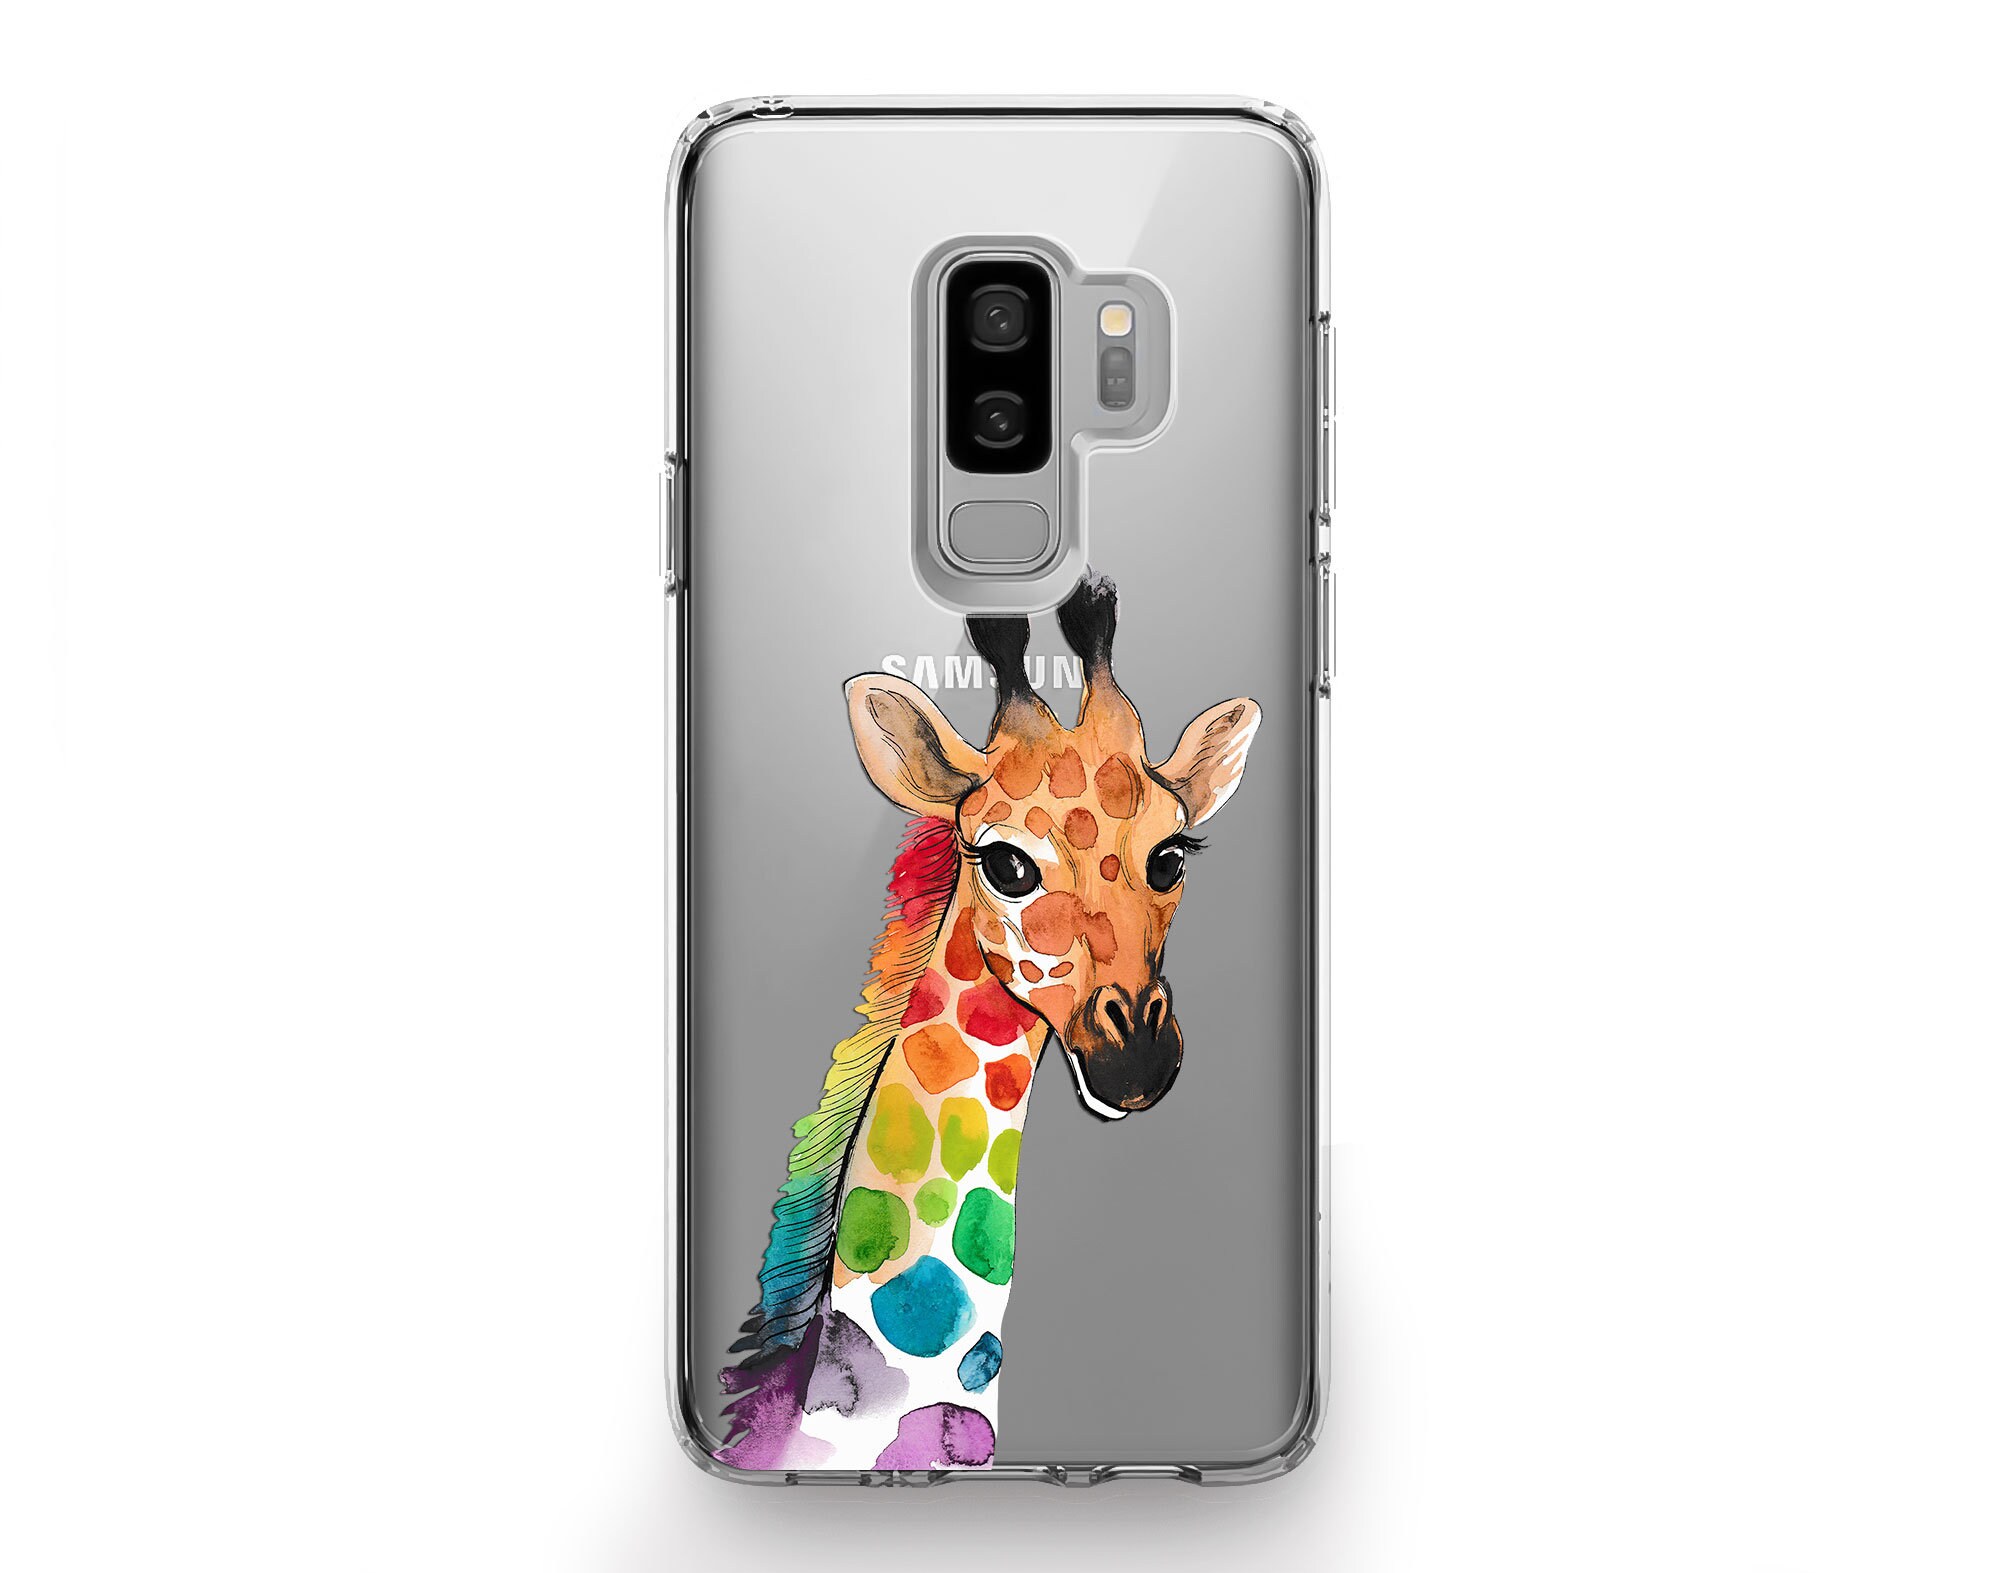 Colored giraffe case IPhone 12 11 Pro Max XR XS X 8 SE Mmdance | Etsy